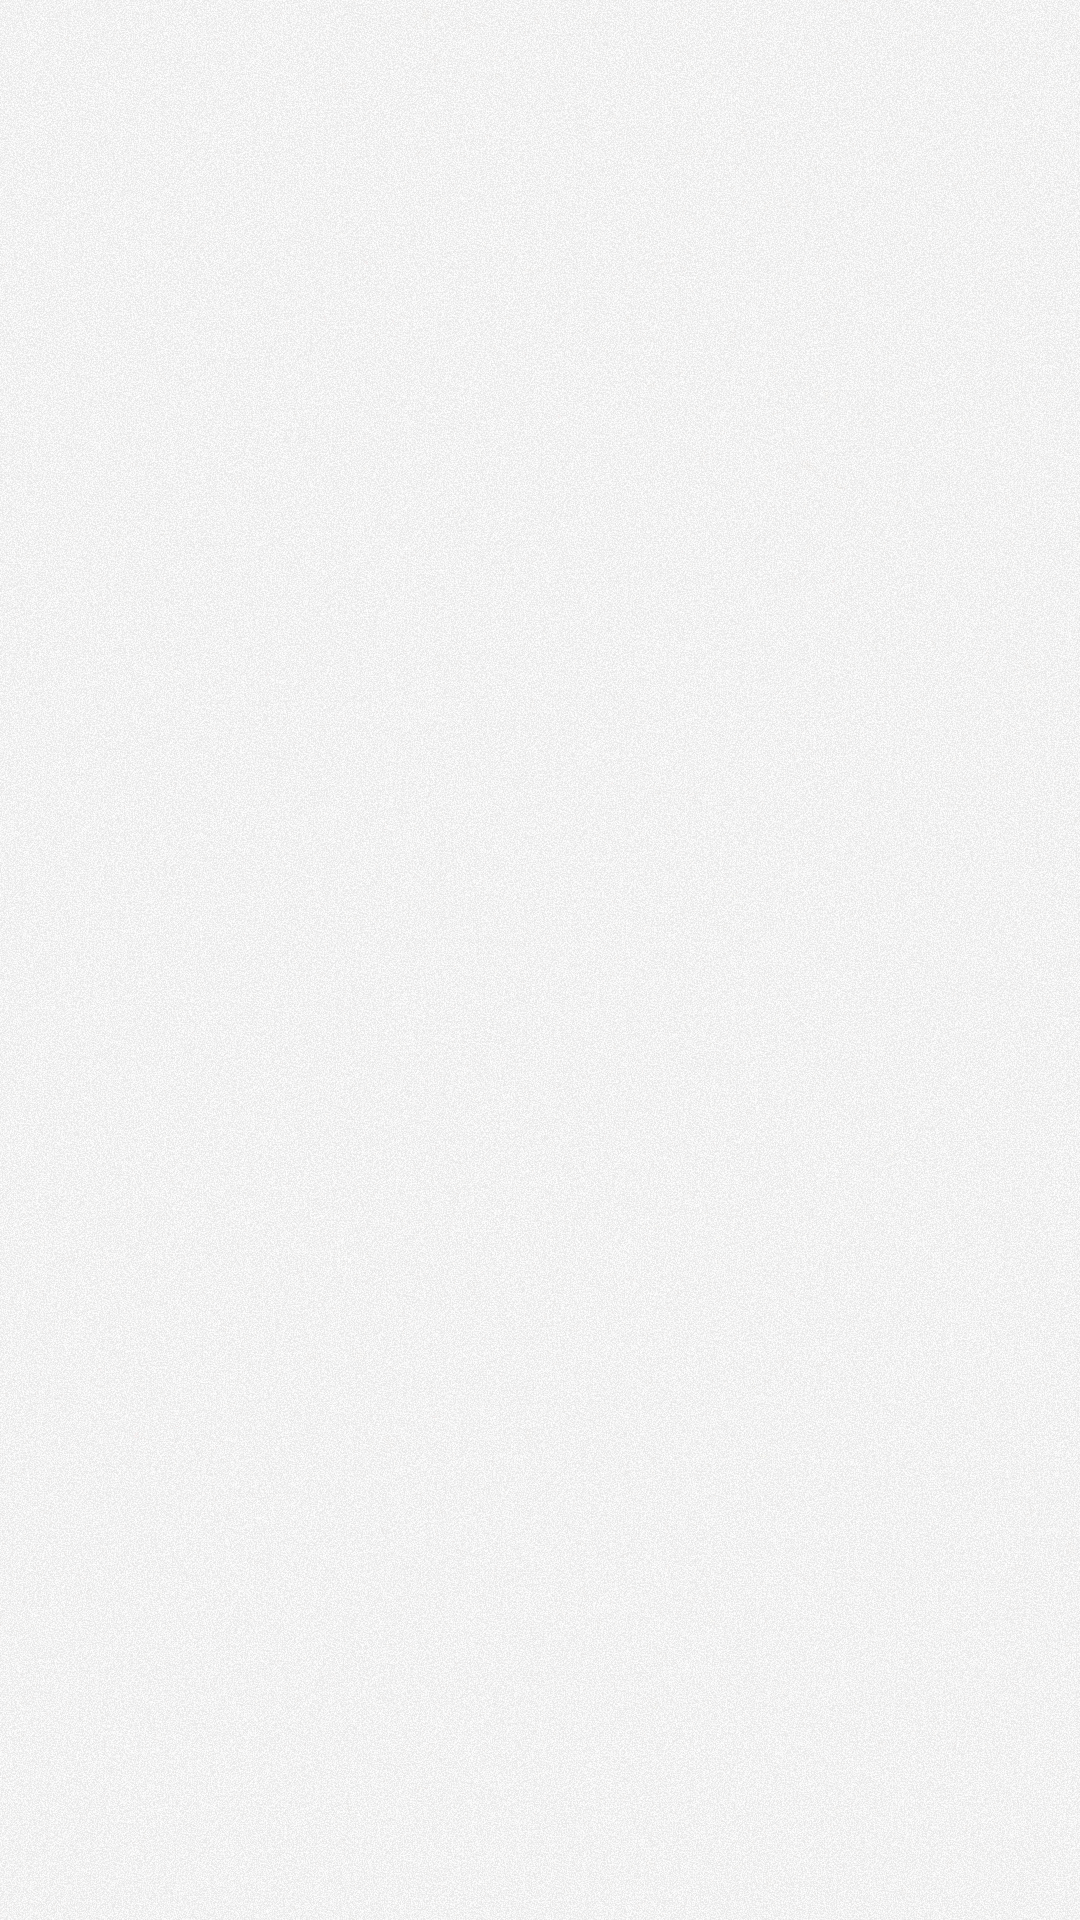 Film Texture White Dust Specks 9:16 Overlay